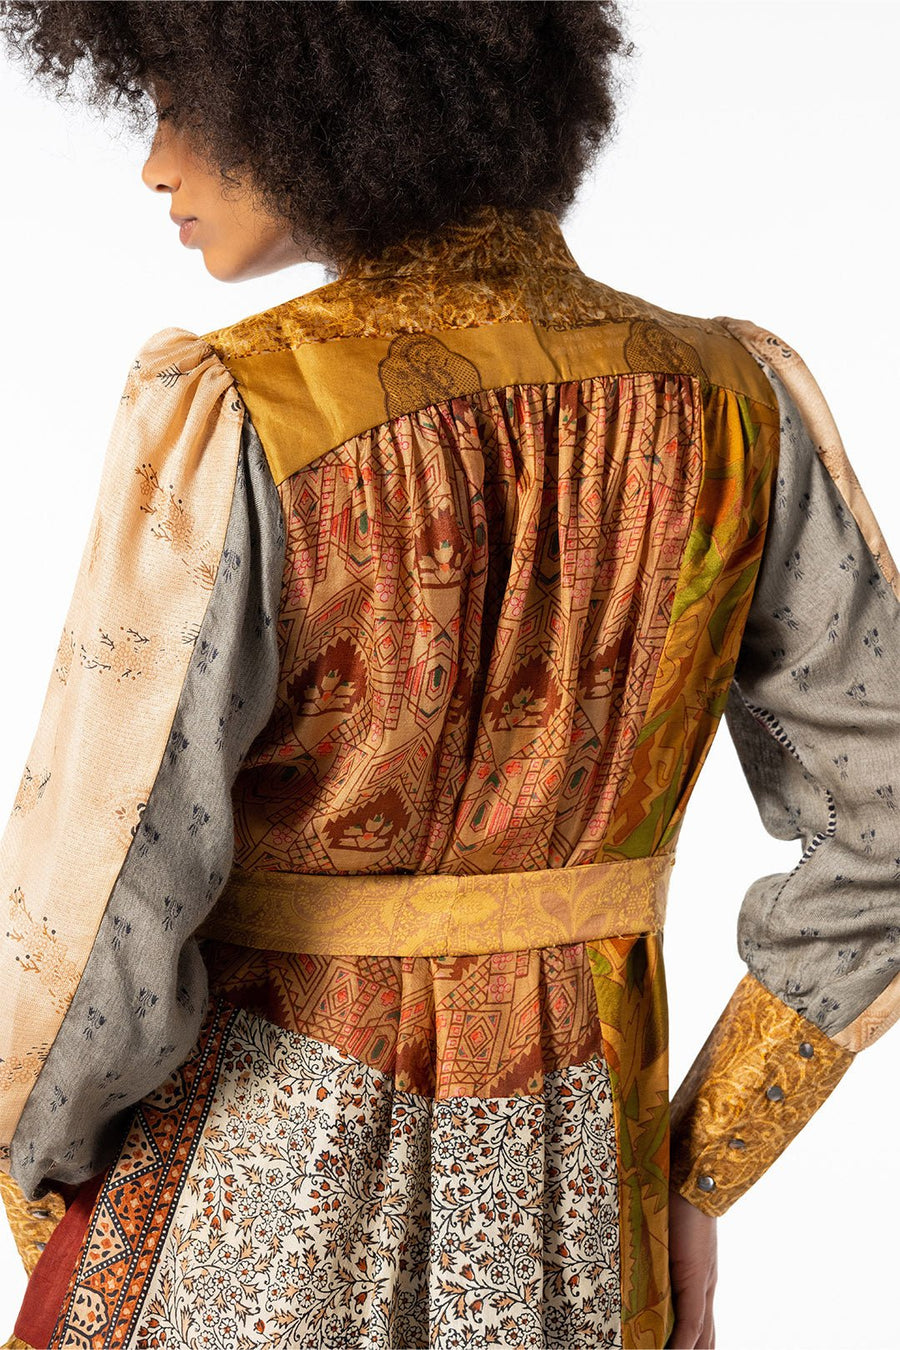 ASHBURY UPCYCLED SARI SHIRTDRESS DRESS, MULTI - Burning Torch Online Boutique